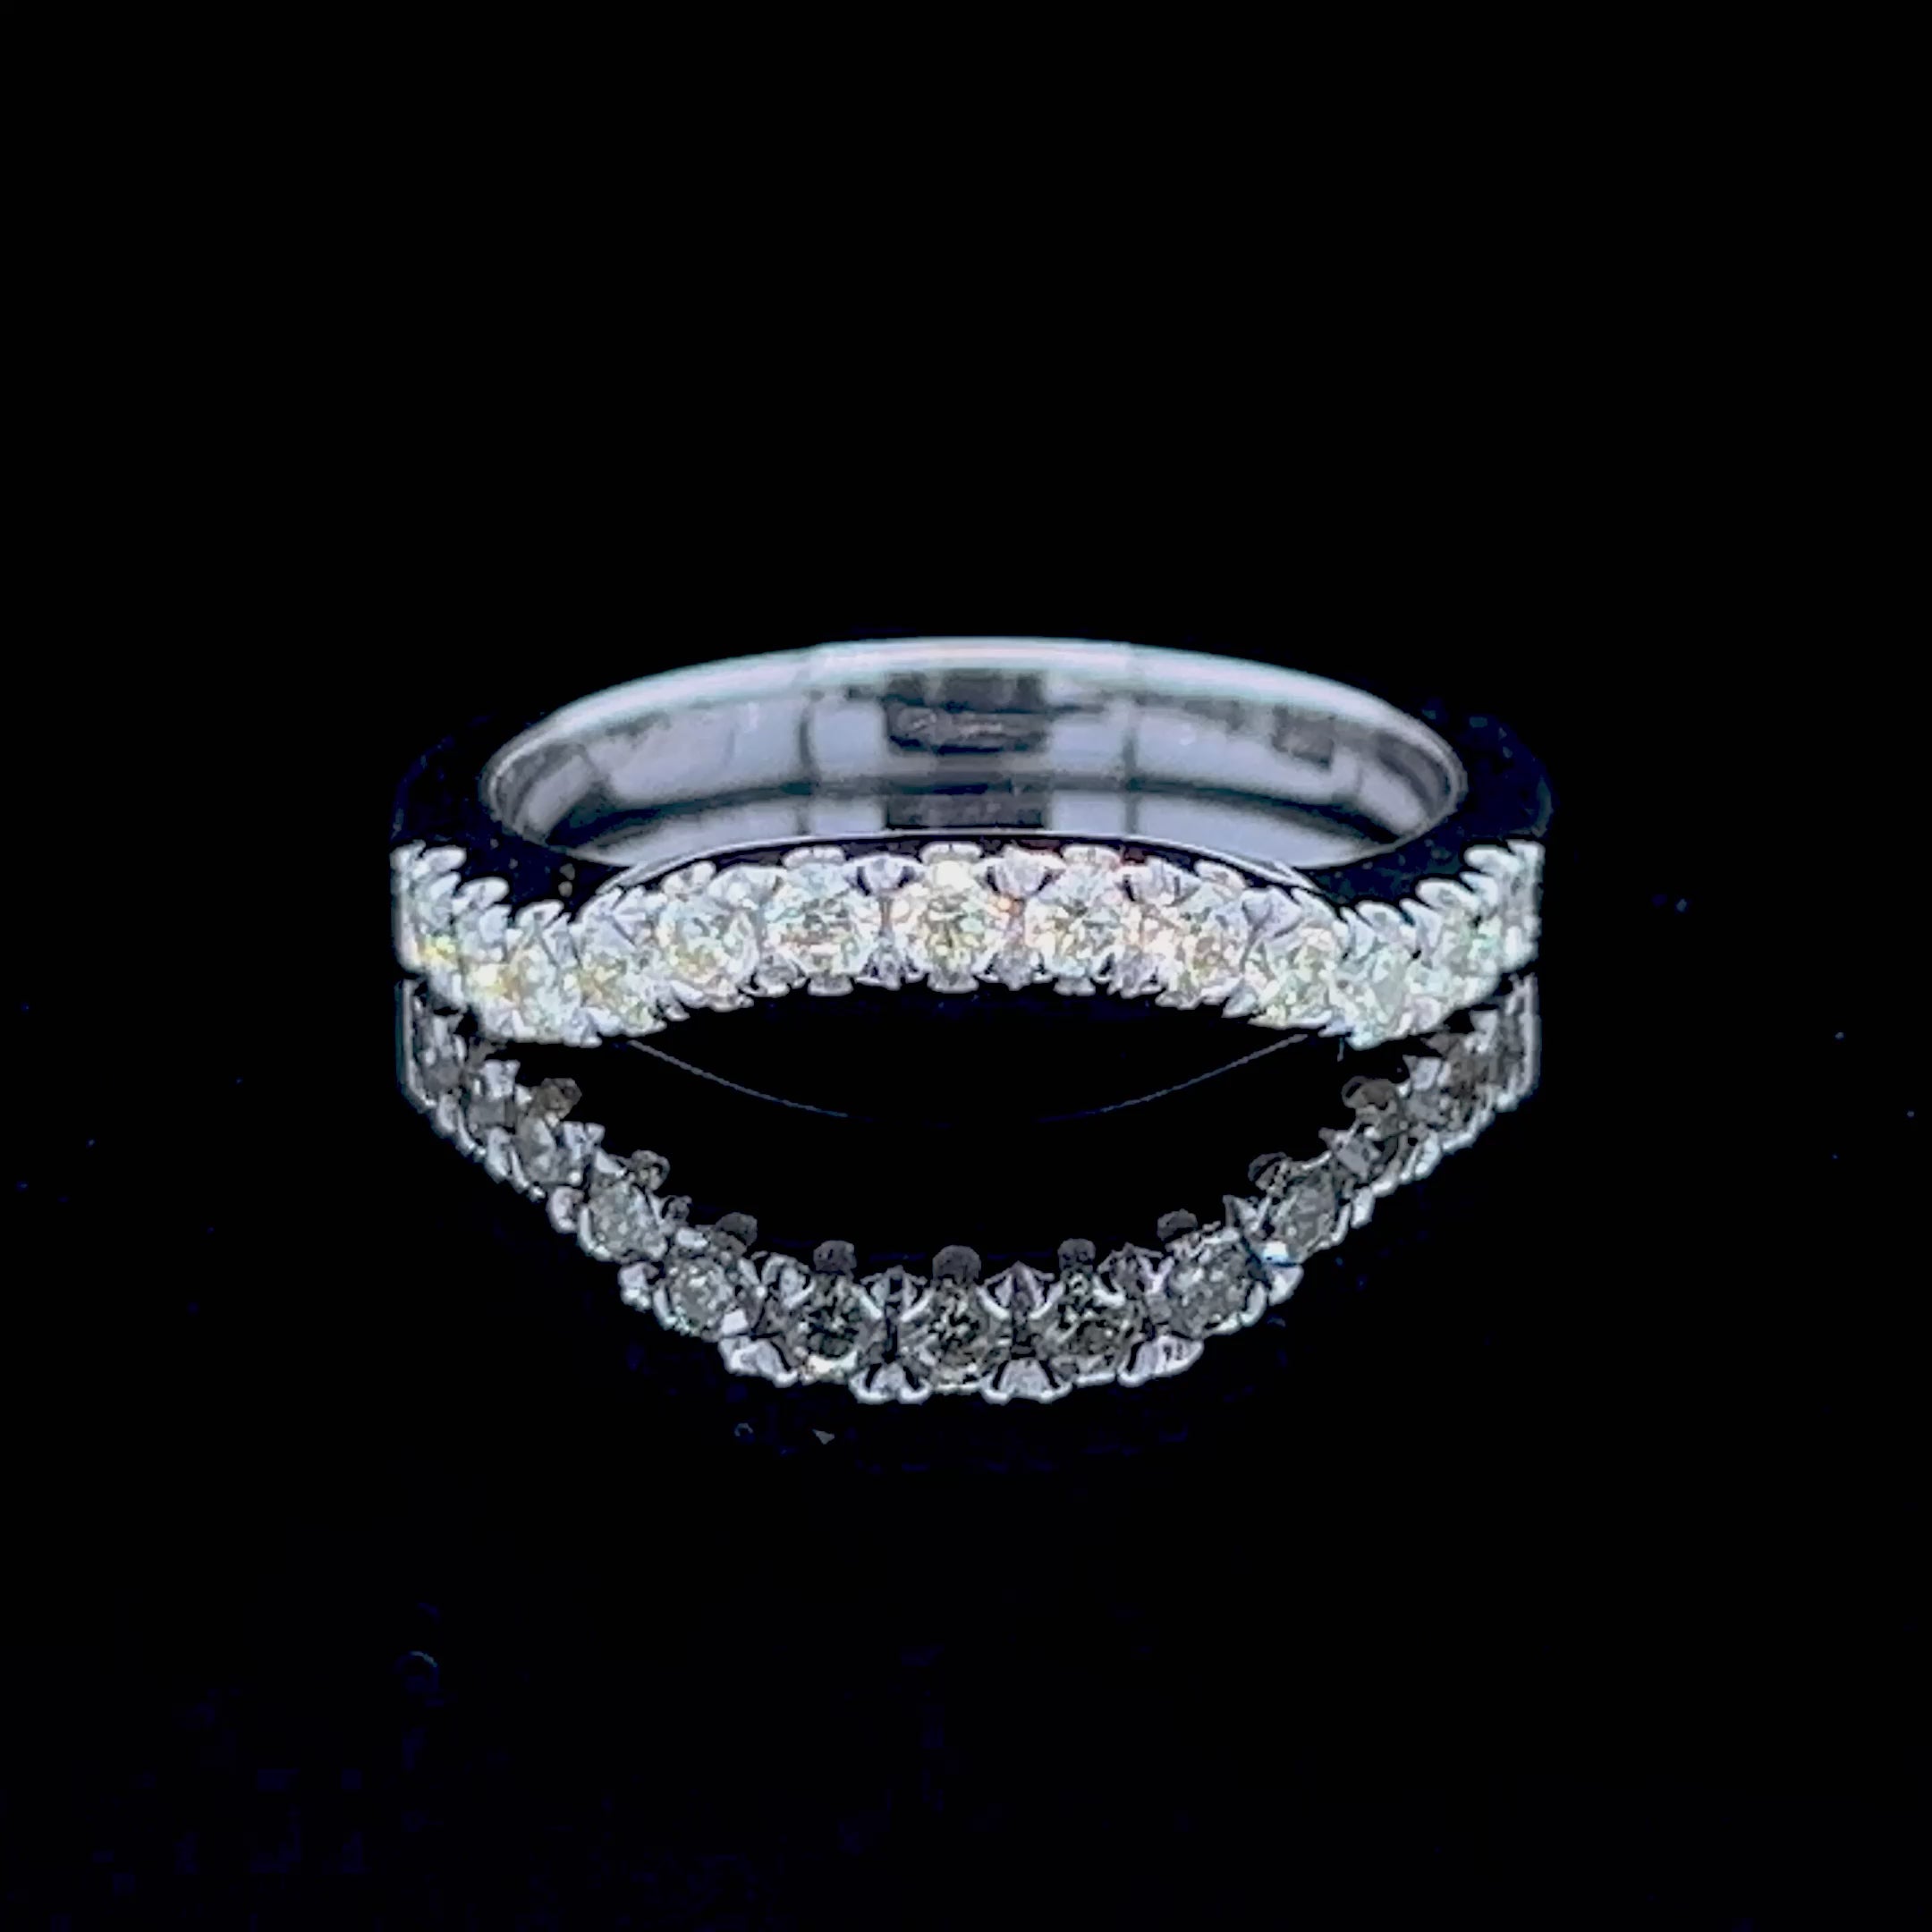 Fashionable 0.30 CT Round Cut Diamond Wedding Band in 14KT White Gold